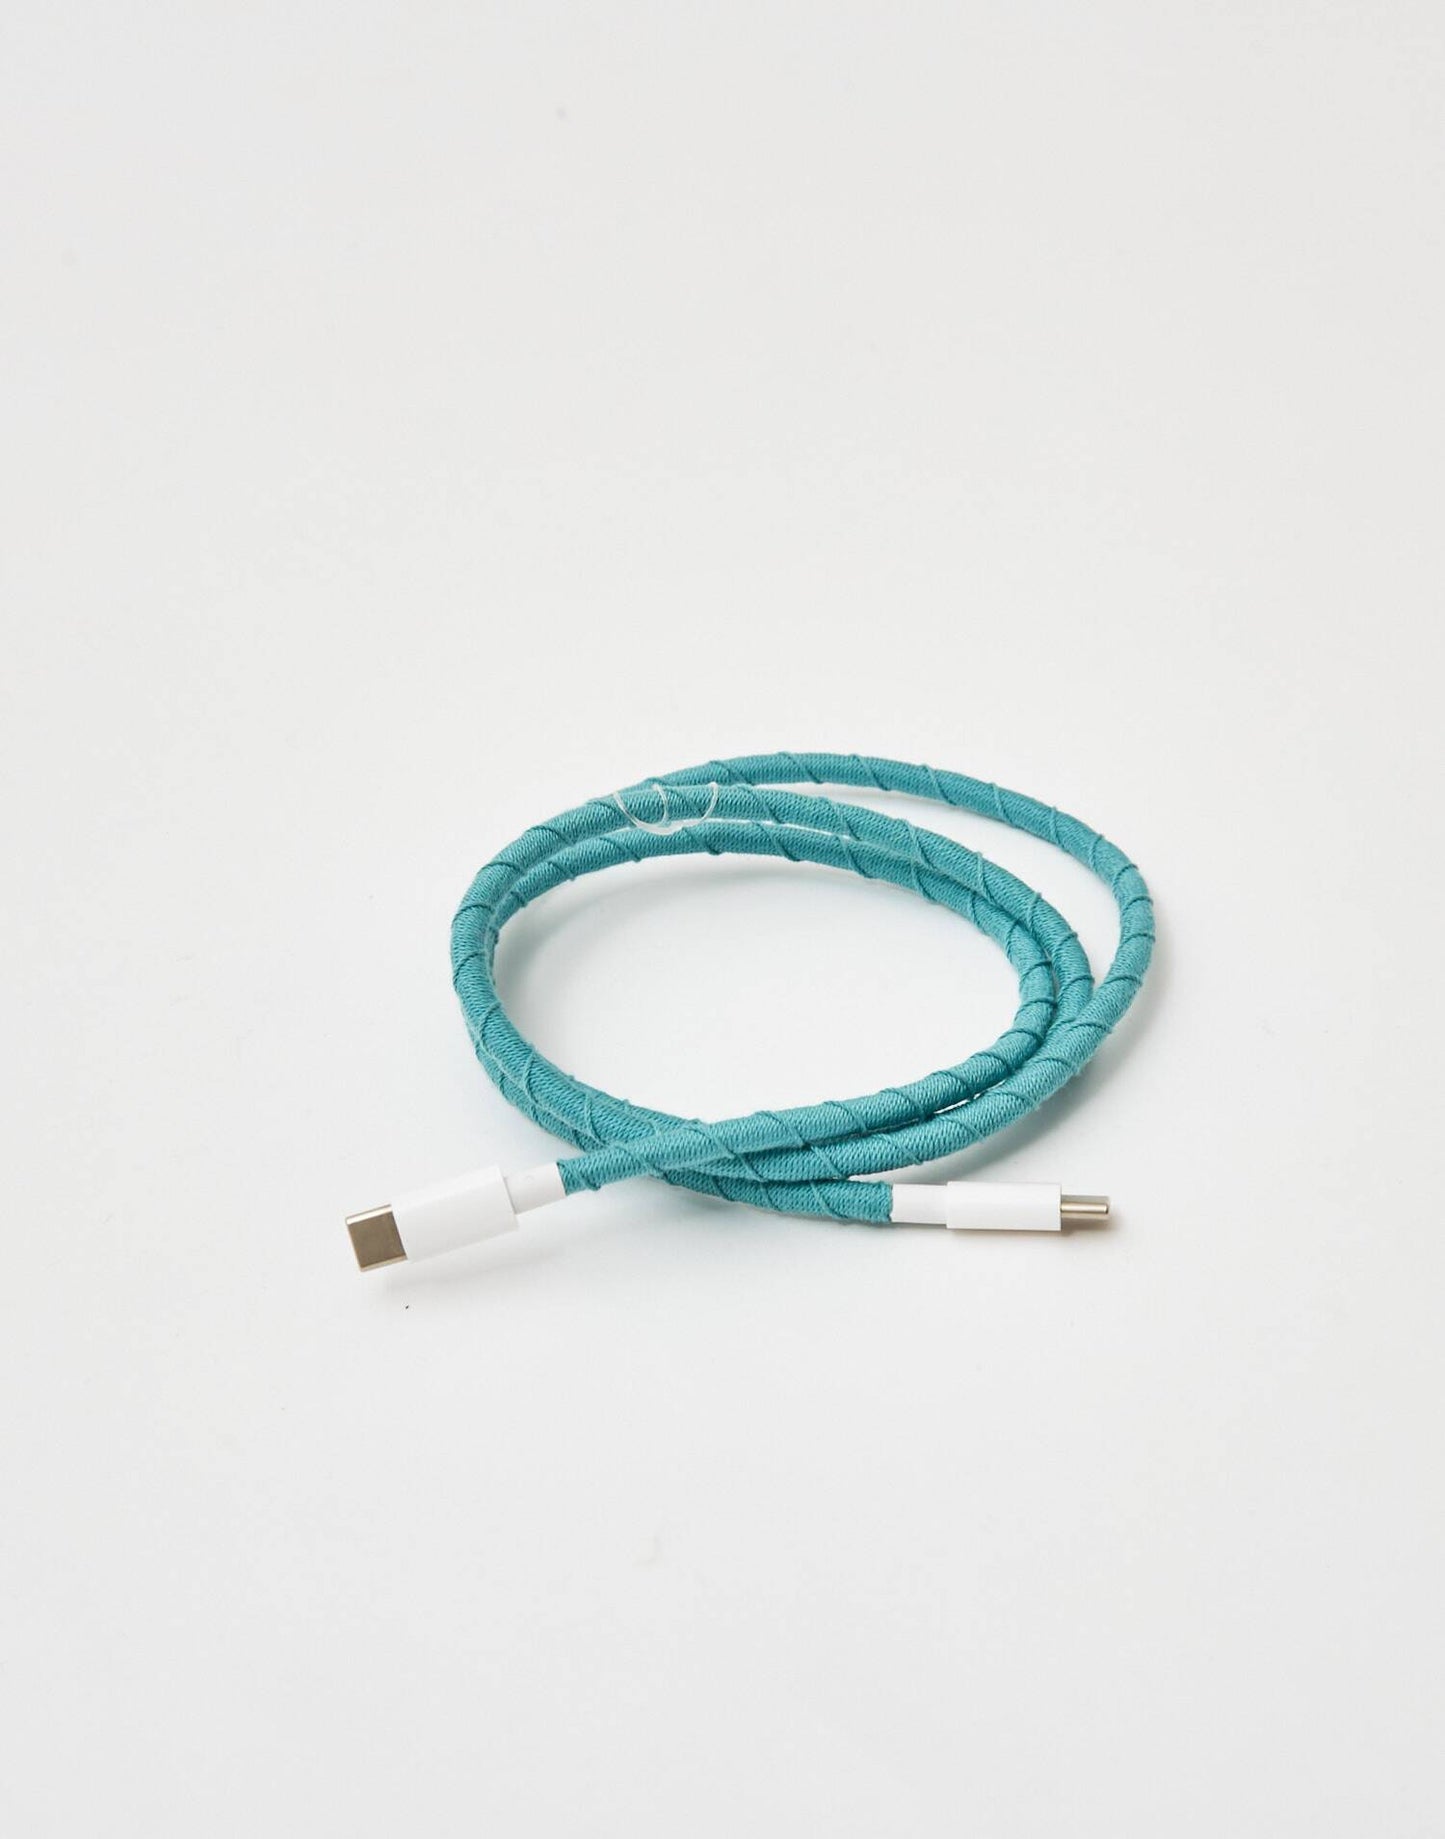 USB C charging cord